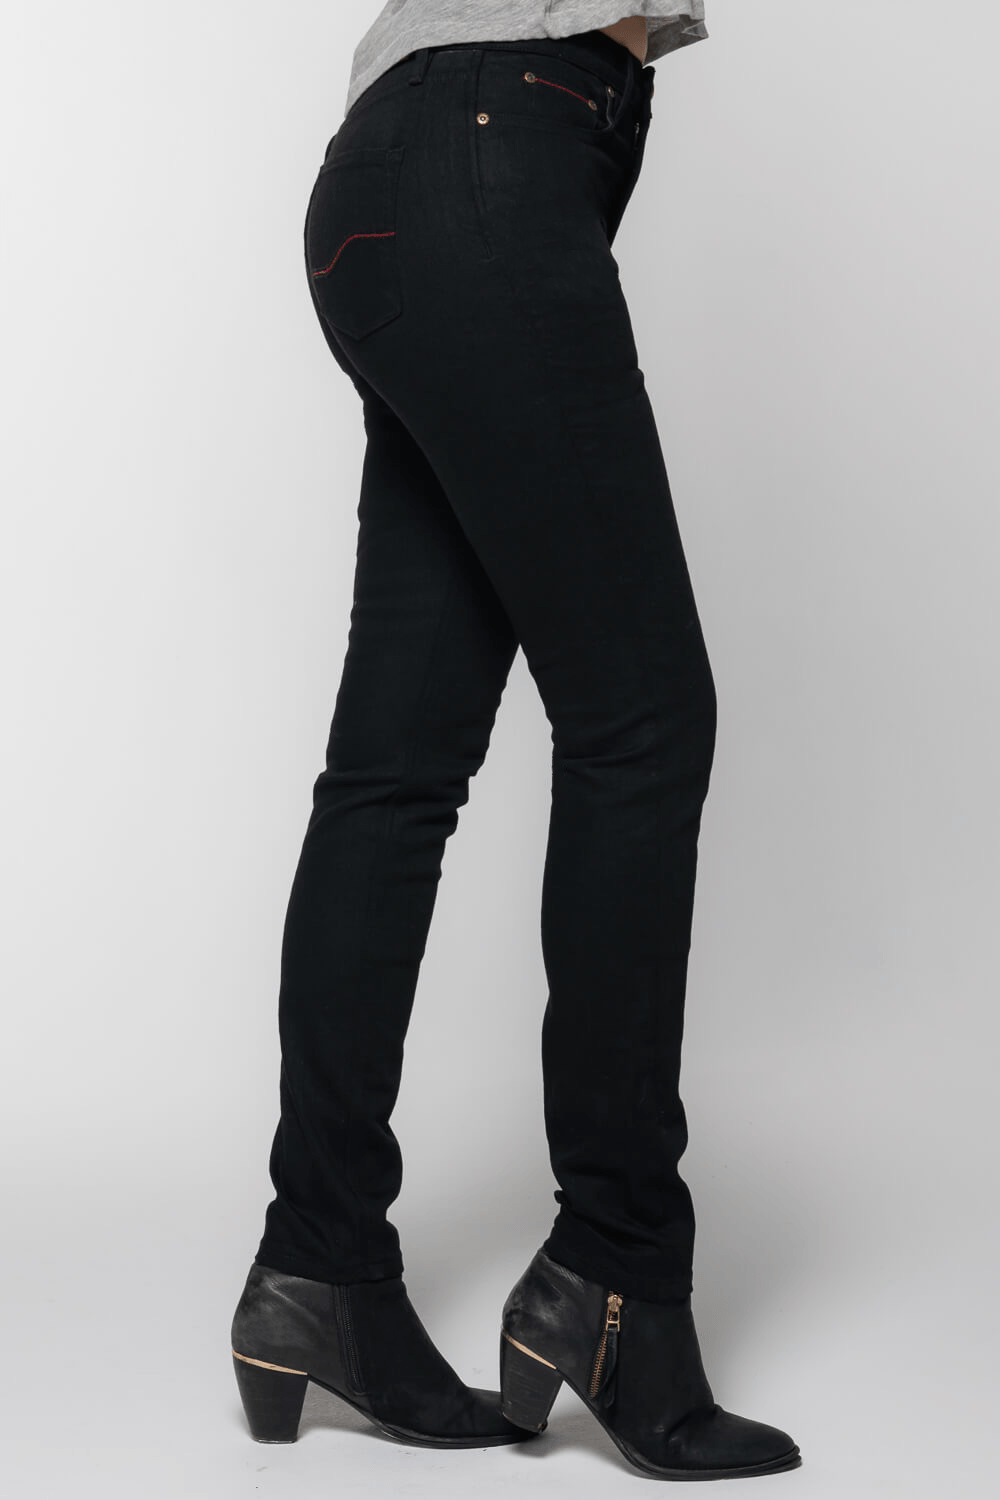 Pantalon jeans moto kevlar , Jeans avec protections moto en promo